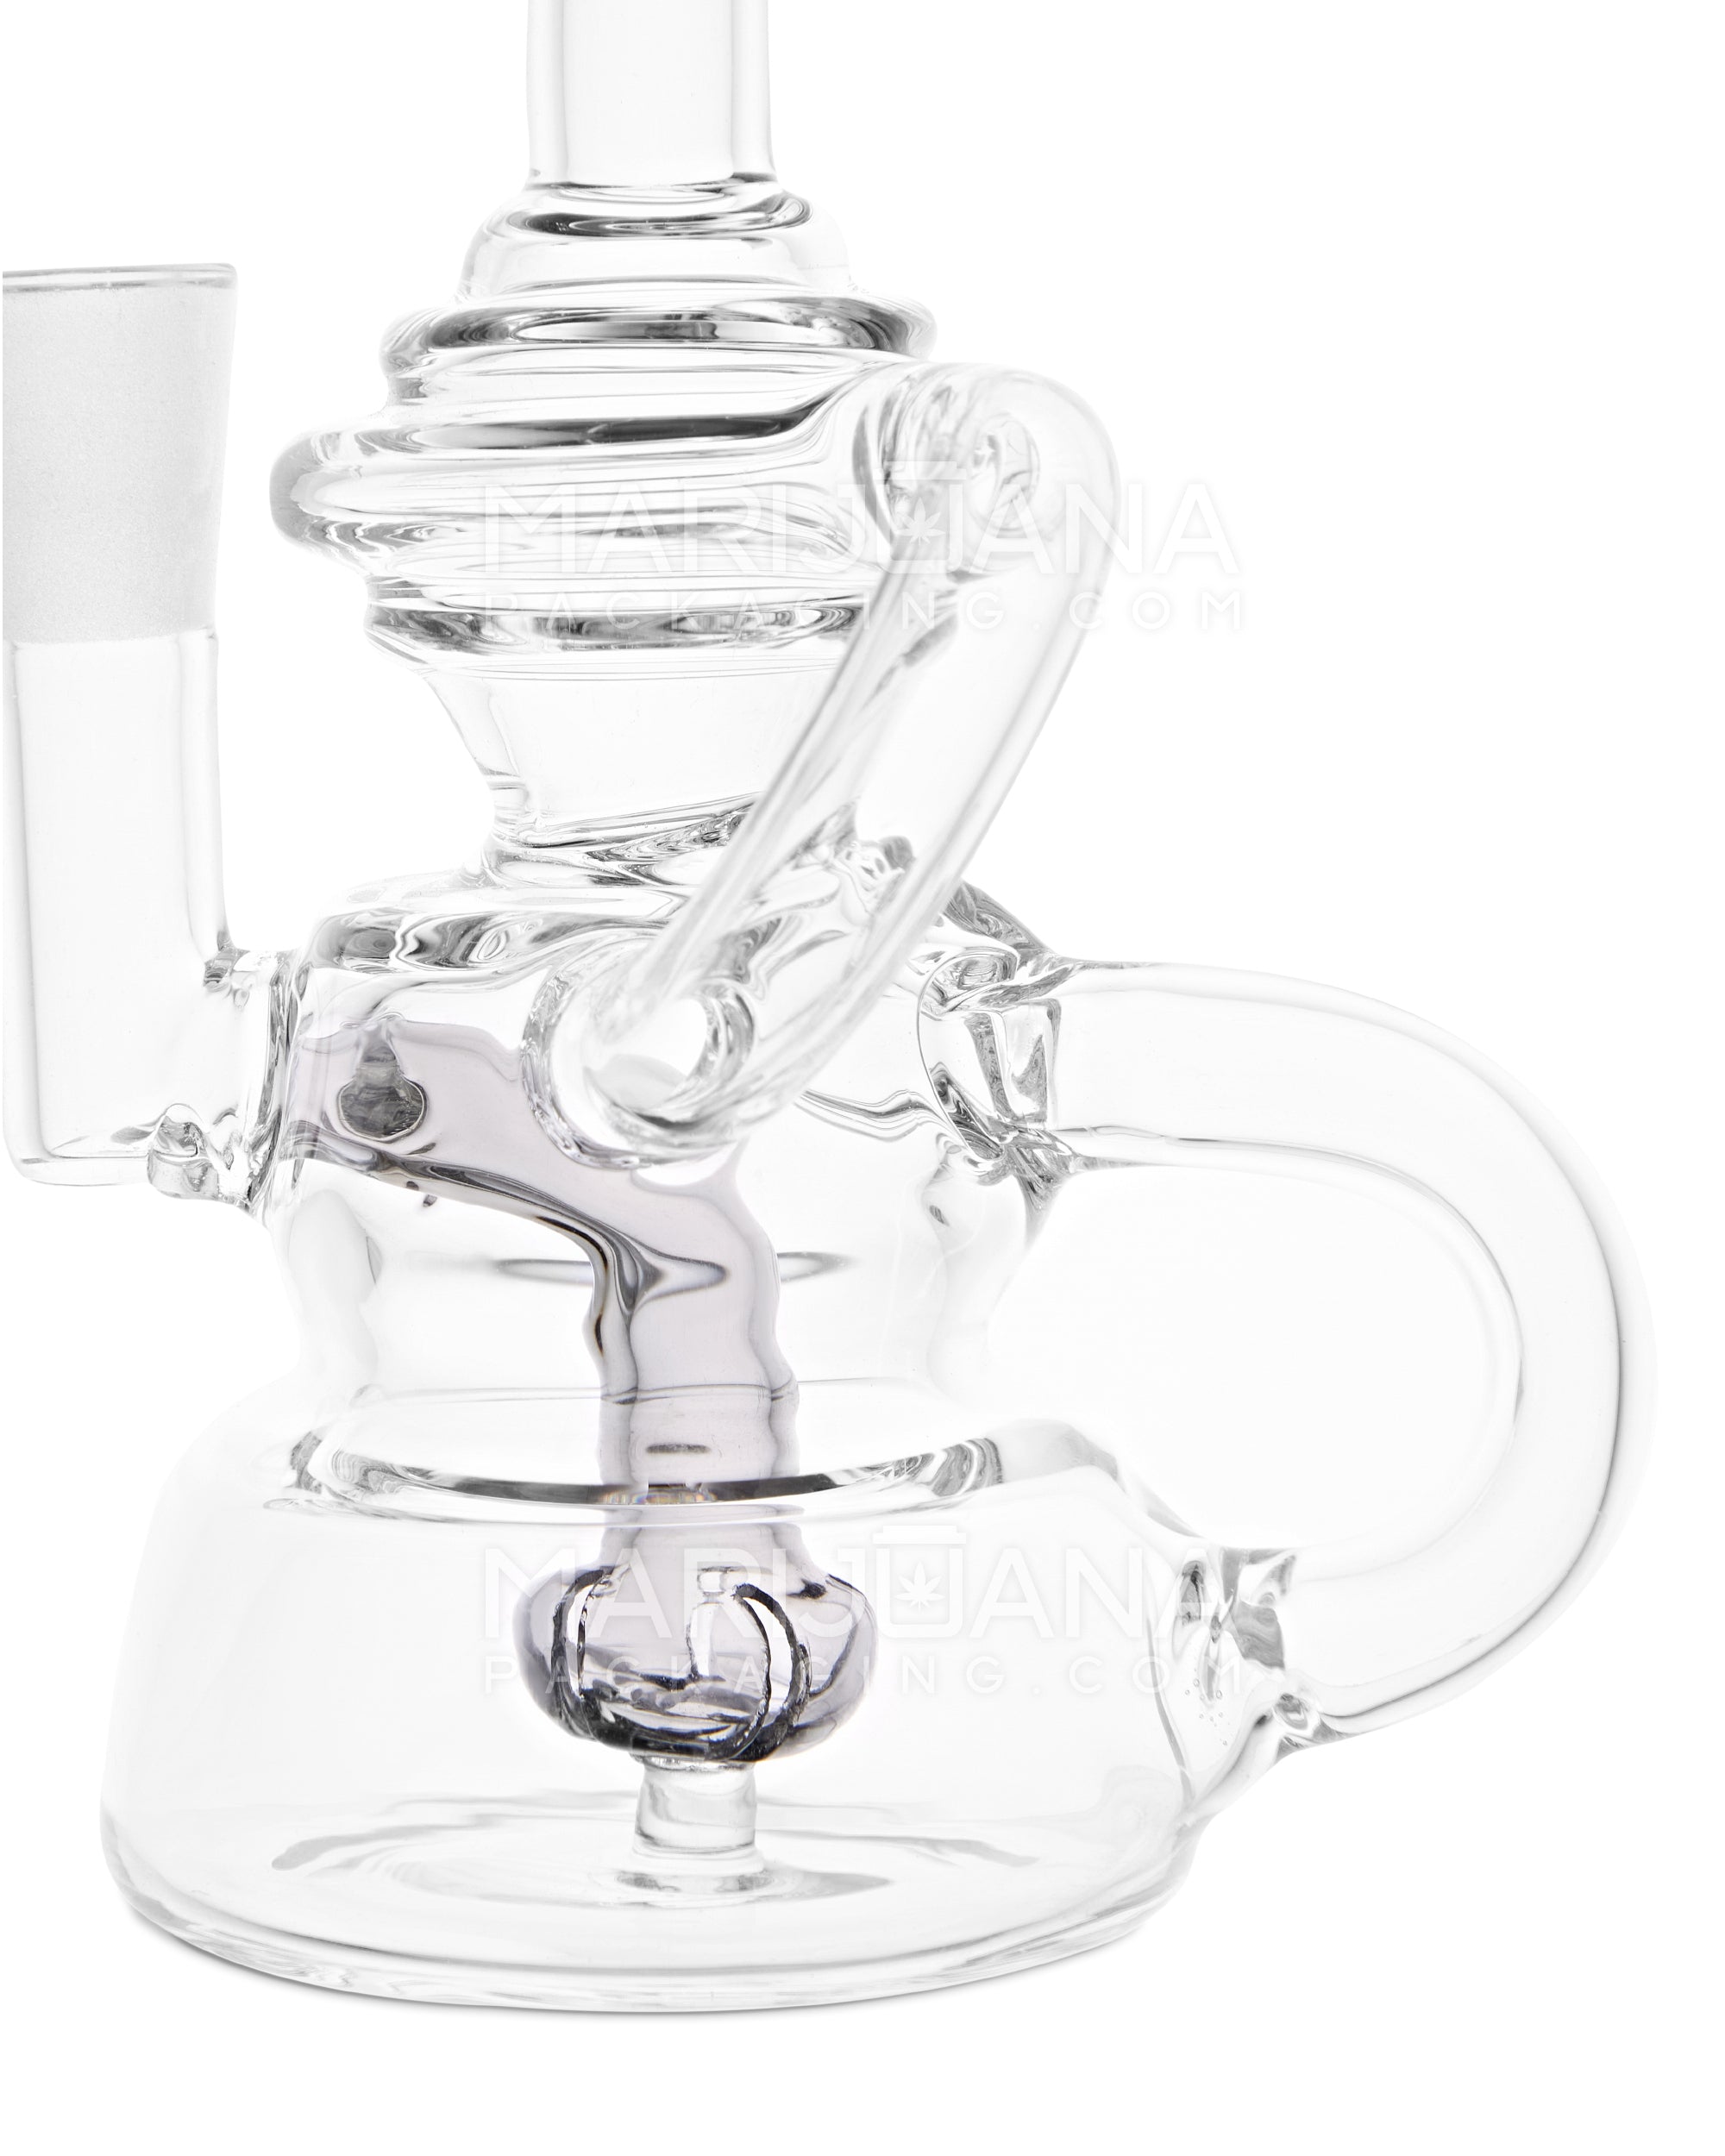 USA Glass | Bent Neck Single Uptake Recycler Water Pipe w/ Orb Perc | 5.5in Tall - 10mm Bowl - Smoke